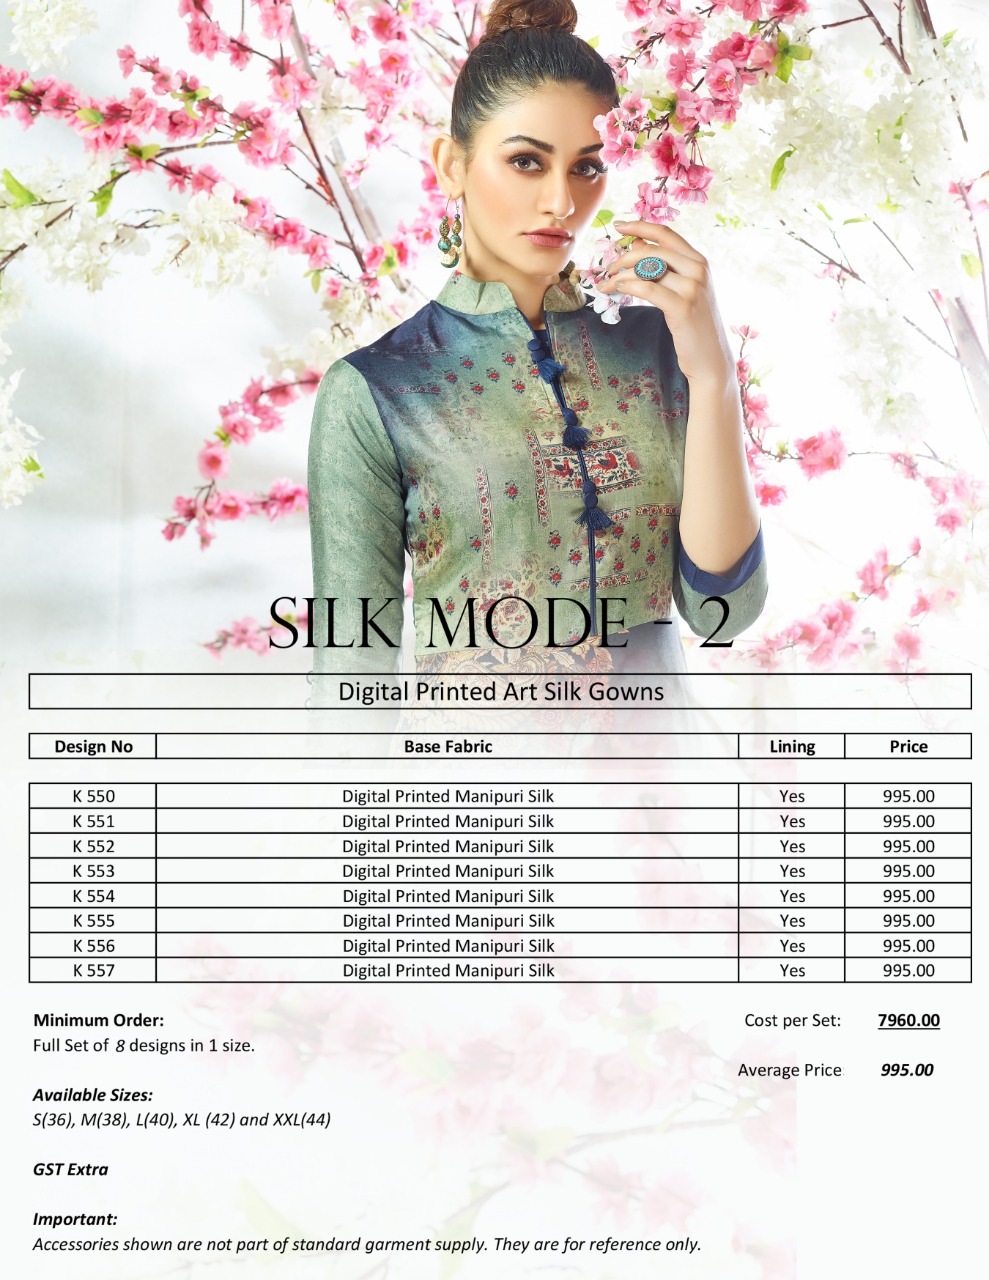 Eternal launch silk mode 2 beautiful ethnic wear gown style kurtis concept